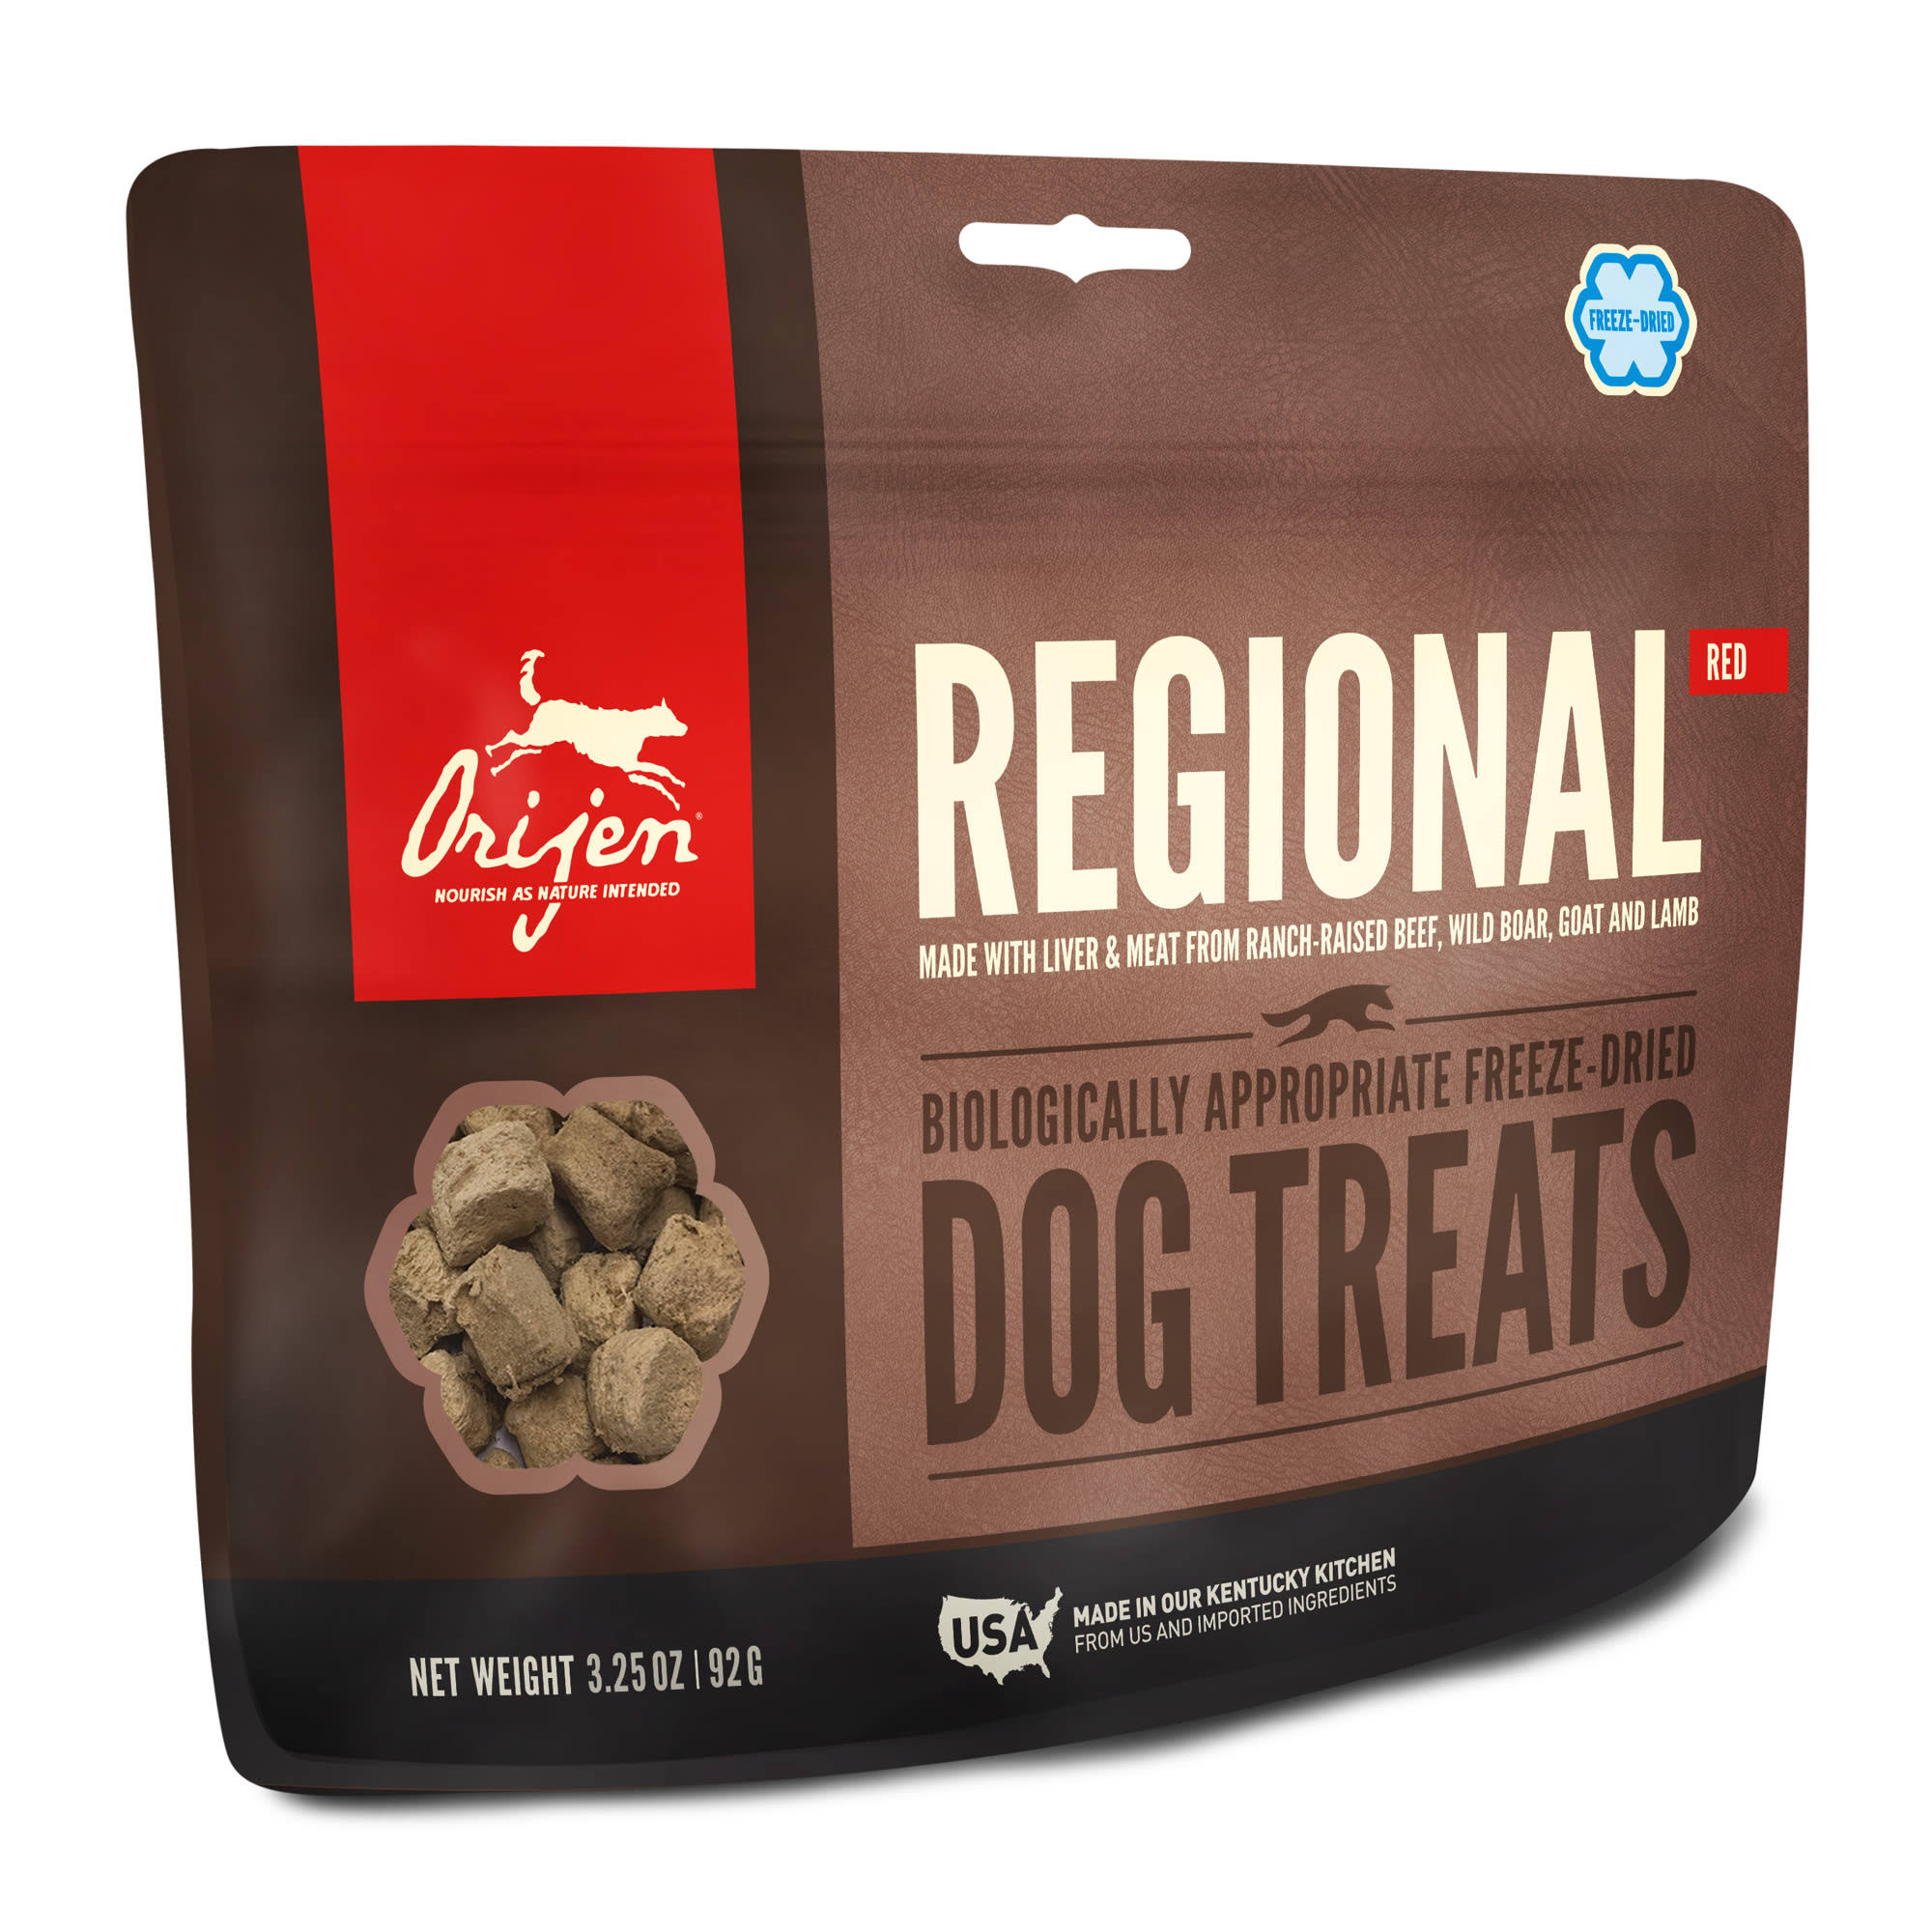 Orijen Dog Treat Freeze Dried - Regional Red - 92g